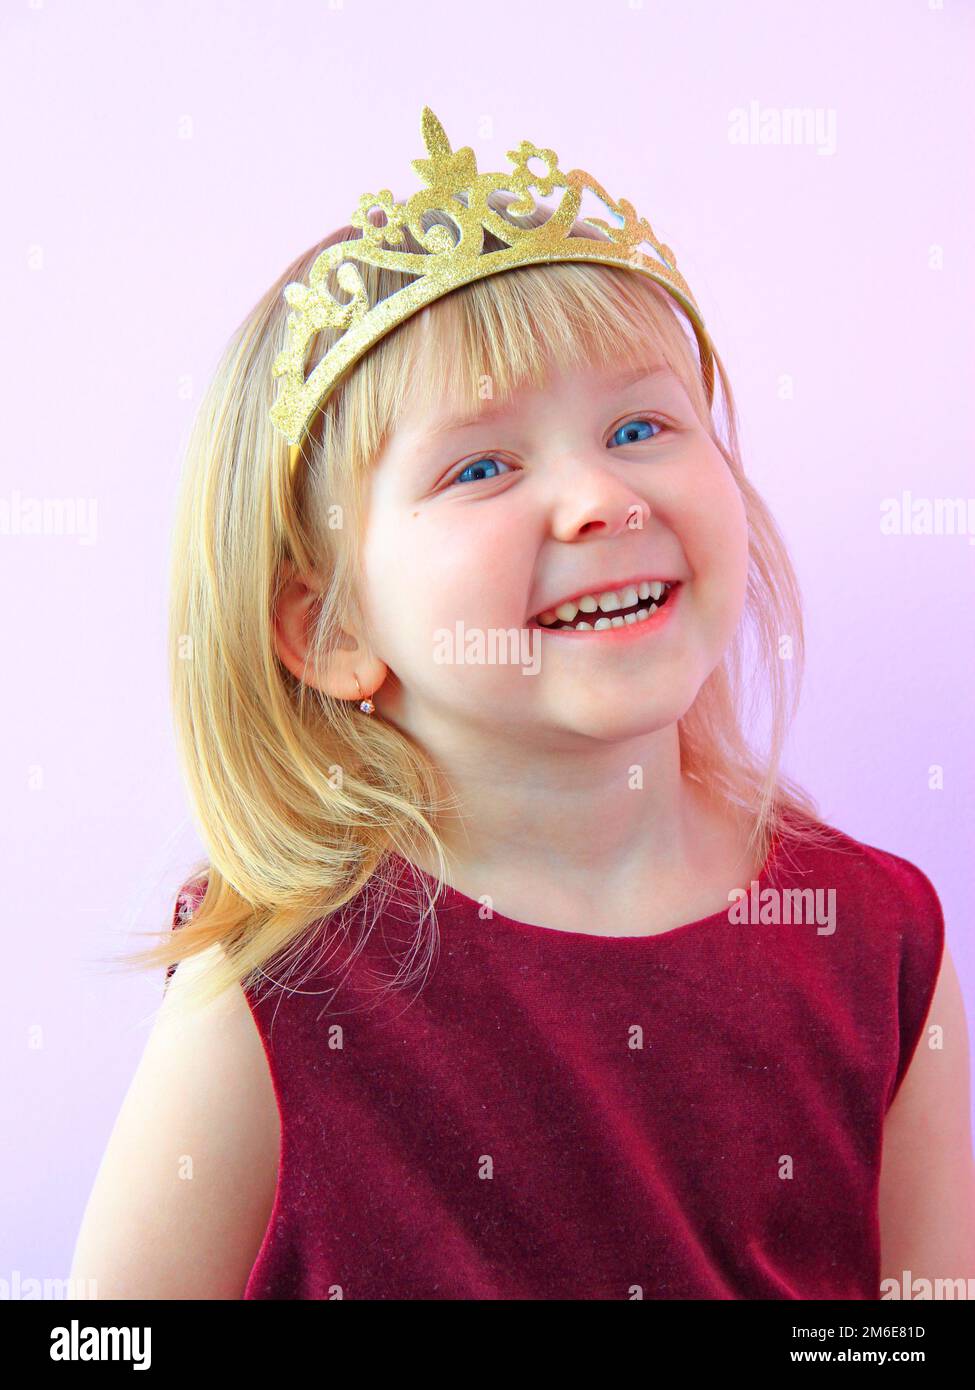 Bambina con corona sulla testa sorridente. Bambino in bel vestito ridendo. La bambina sorride Foto Stock